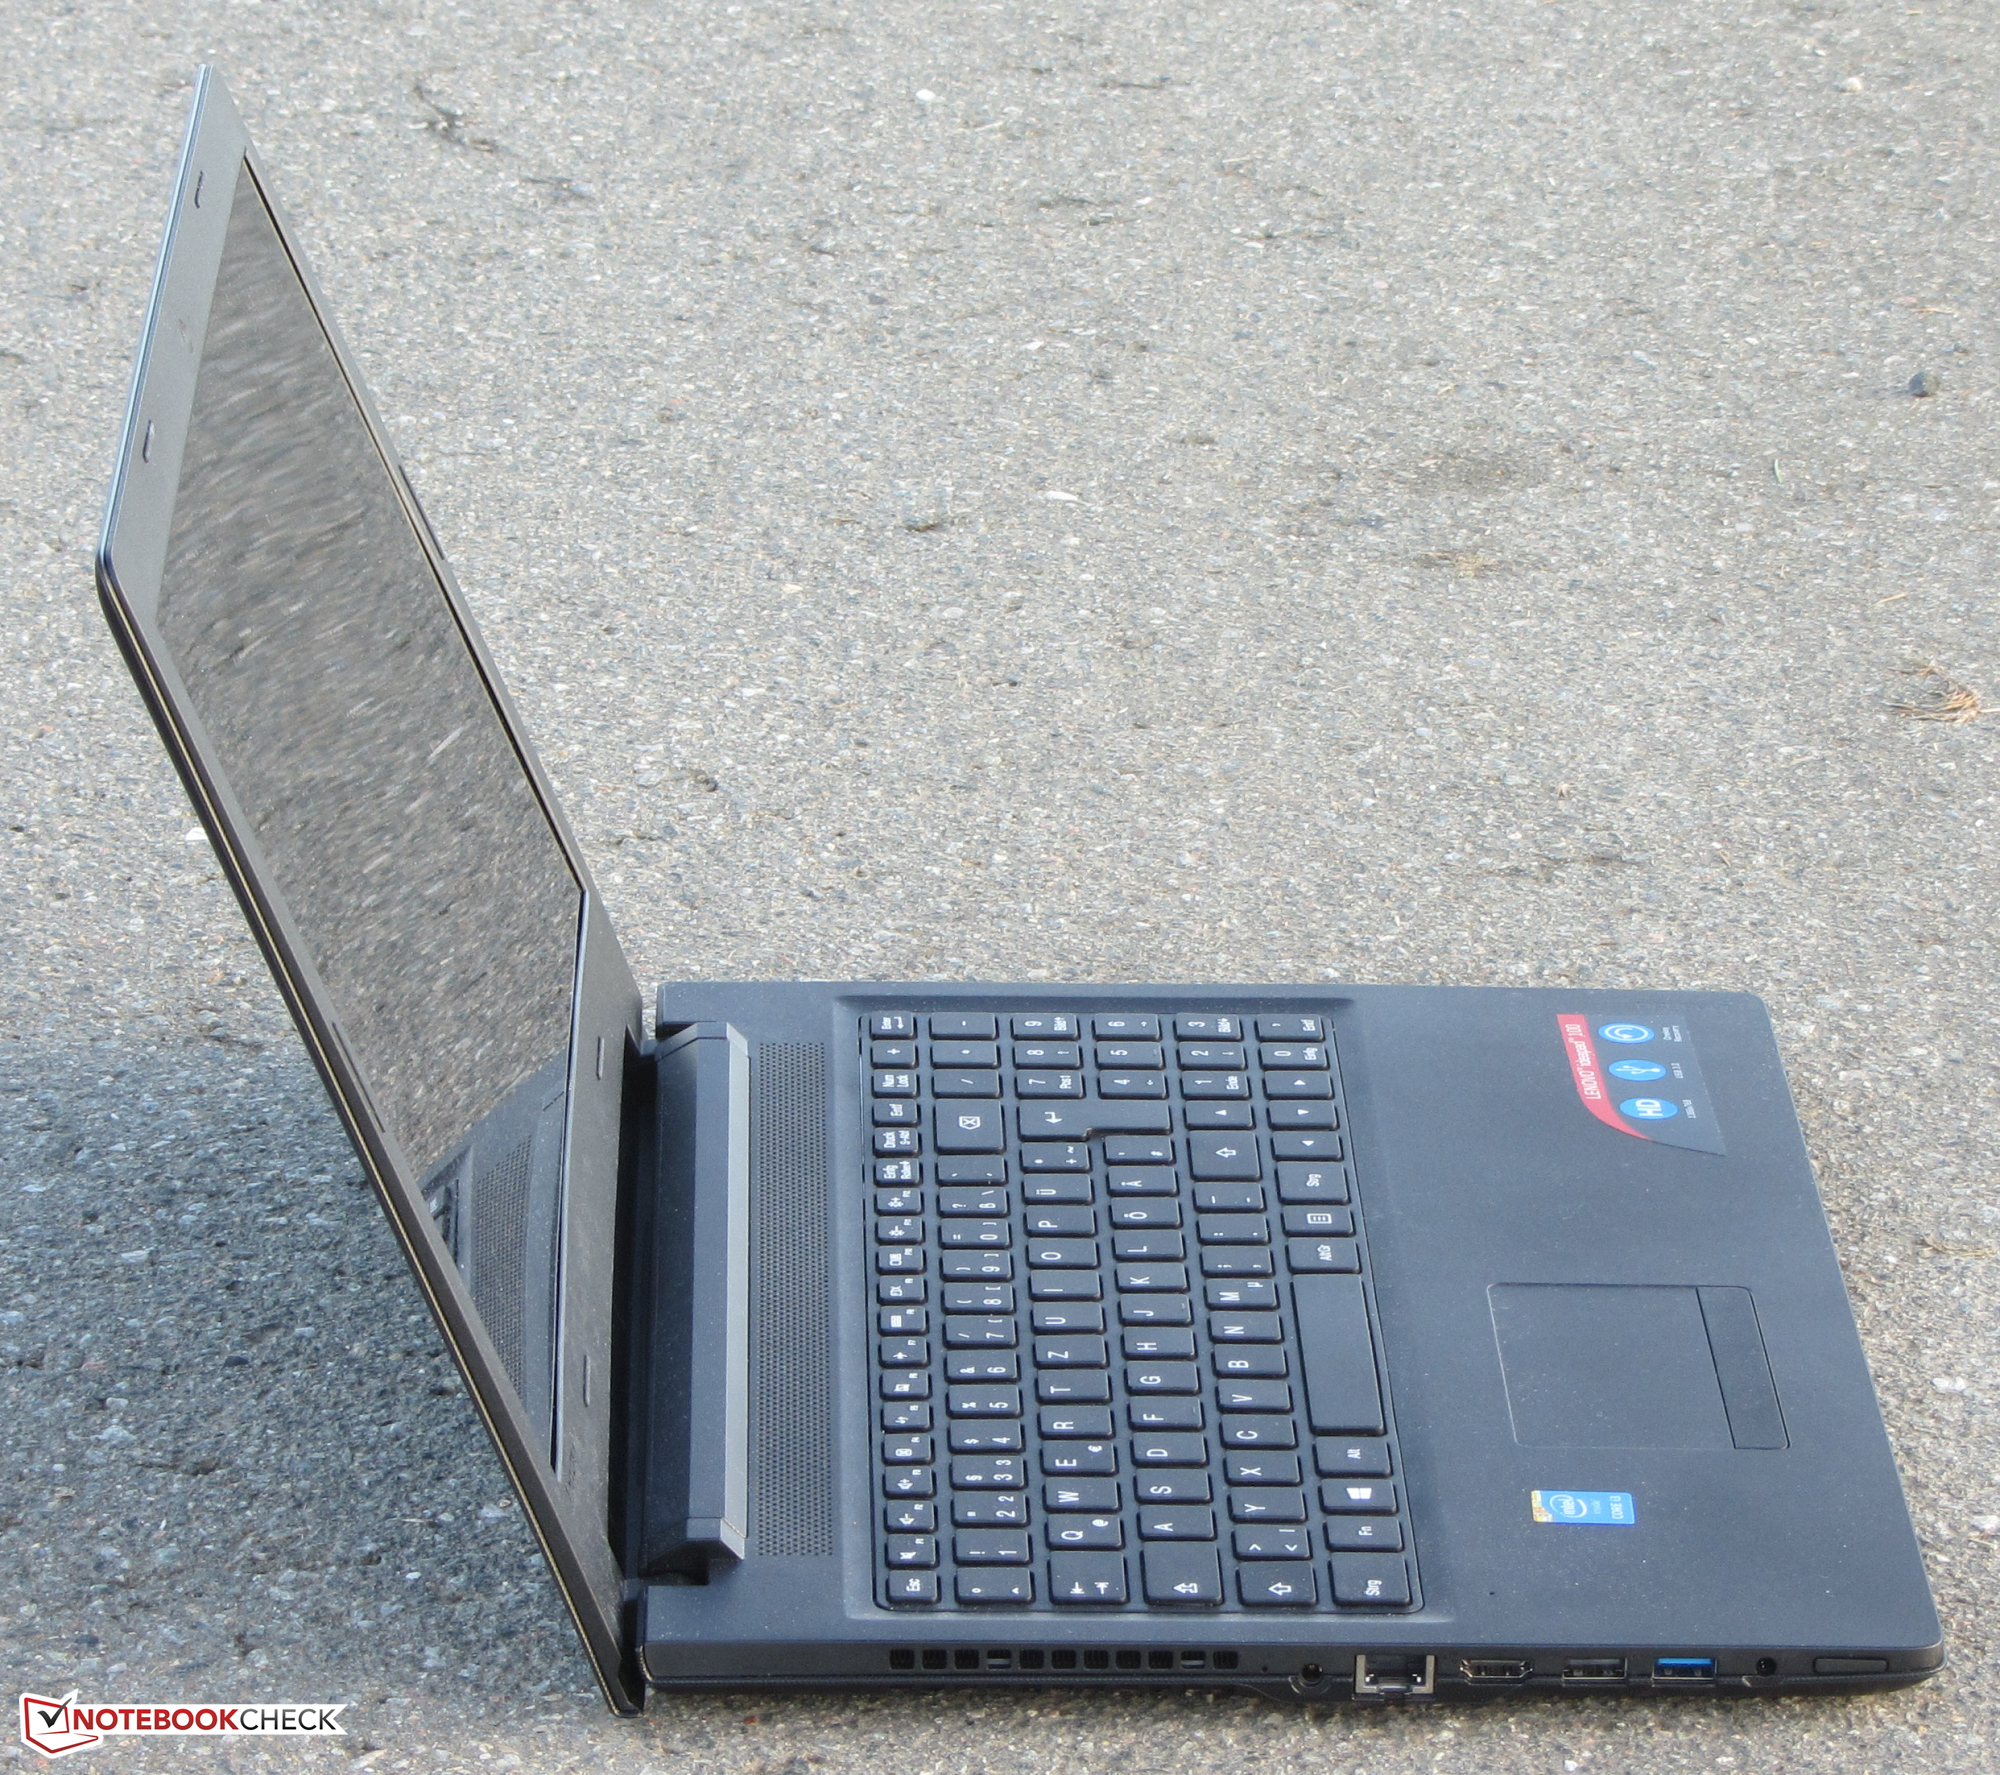 Lenovo Ideapad 100 15ibd Notebook Review Notebookcheck Net Reviews